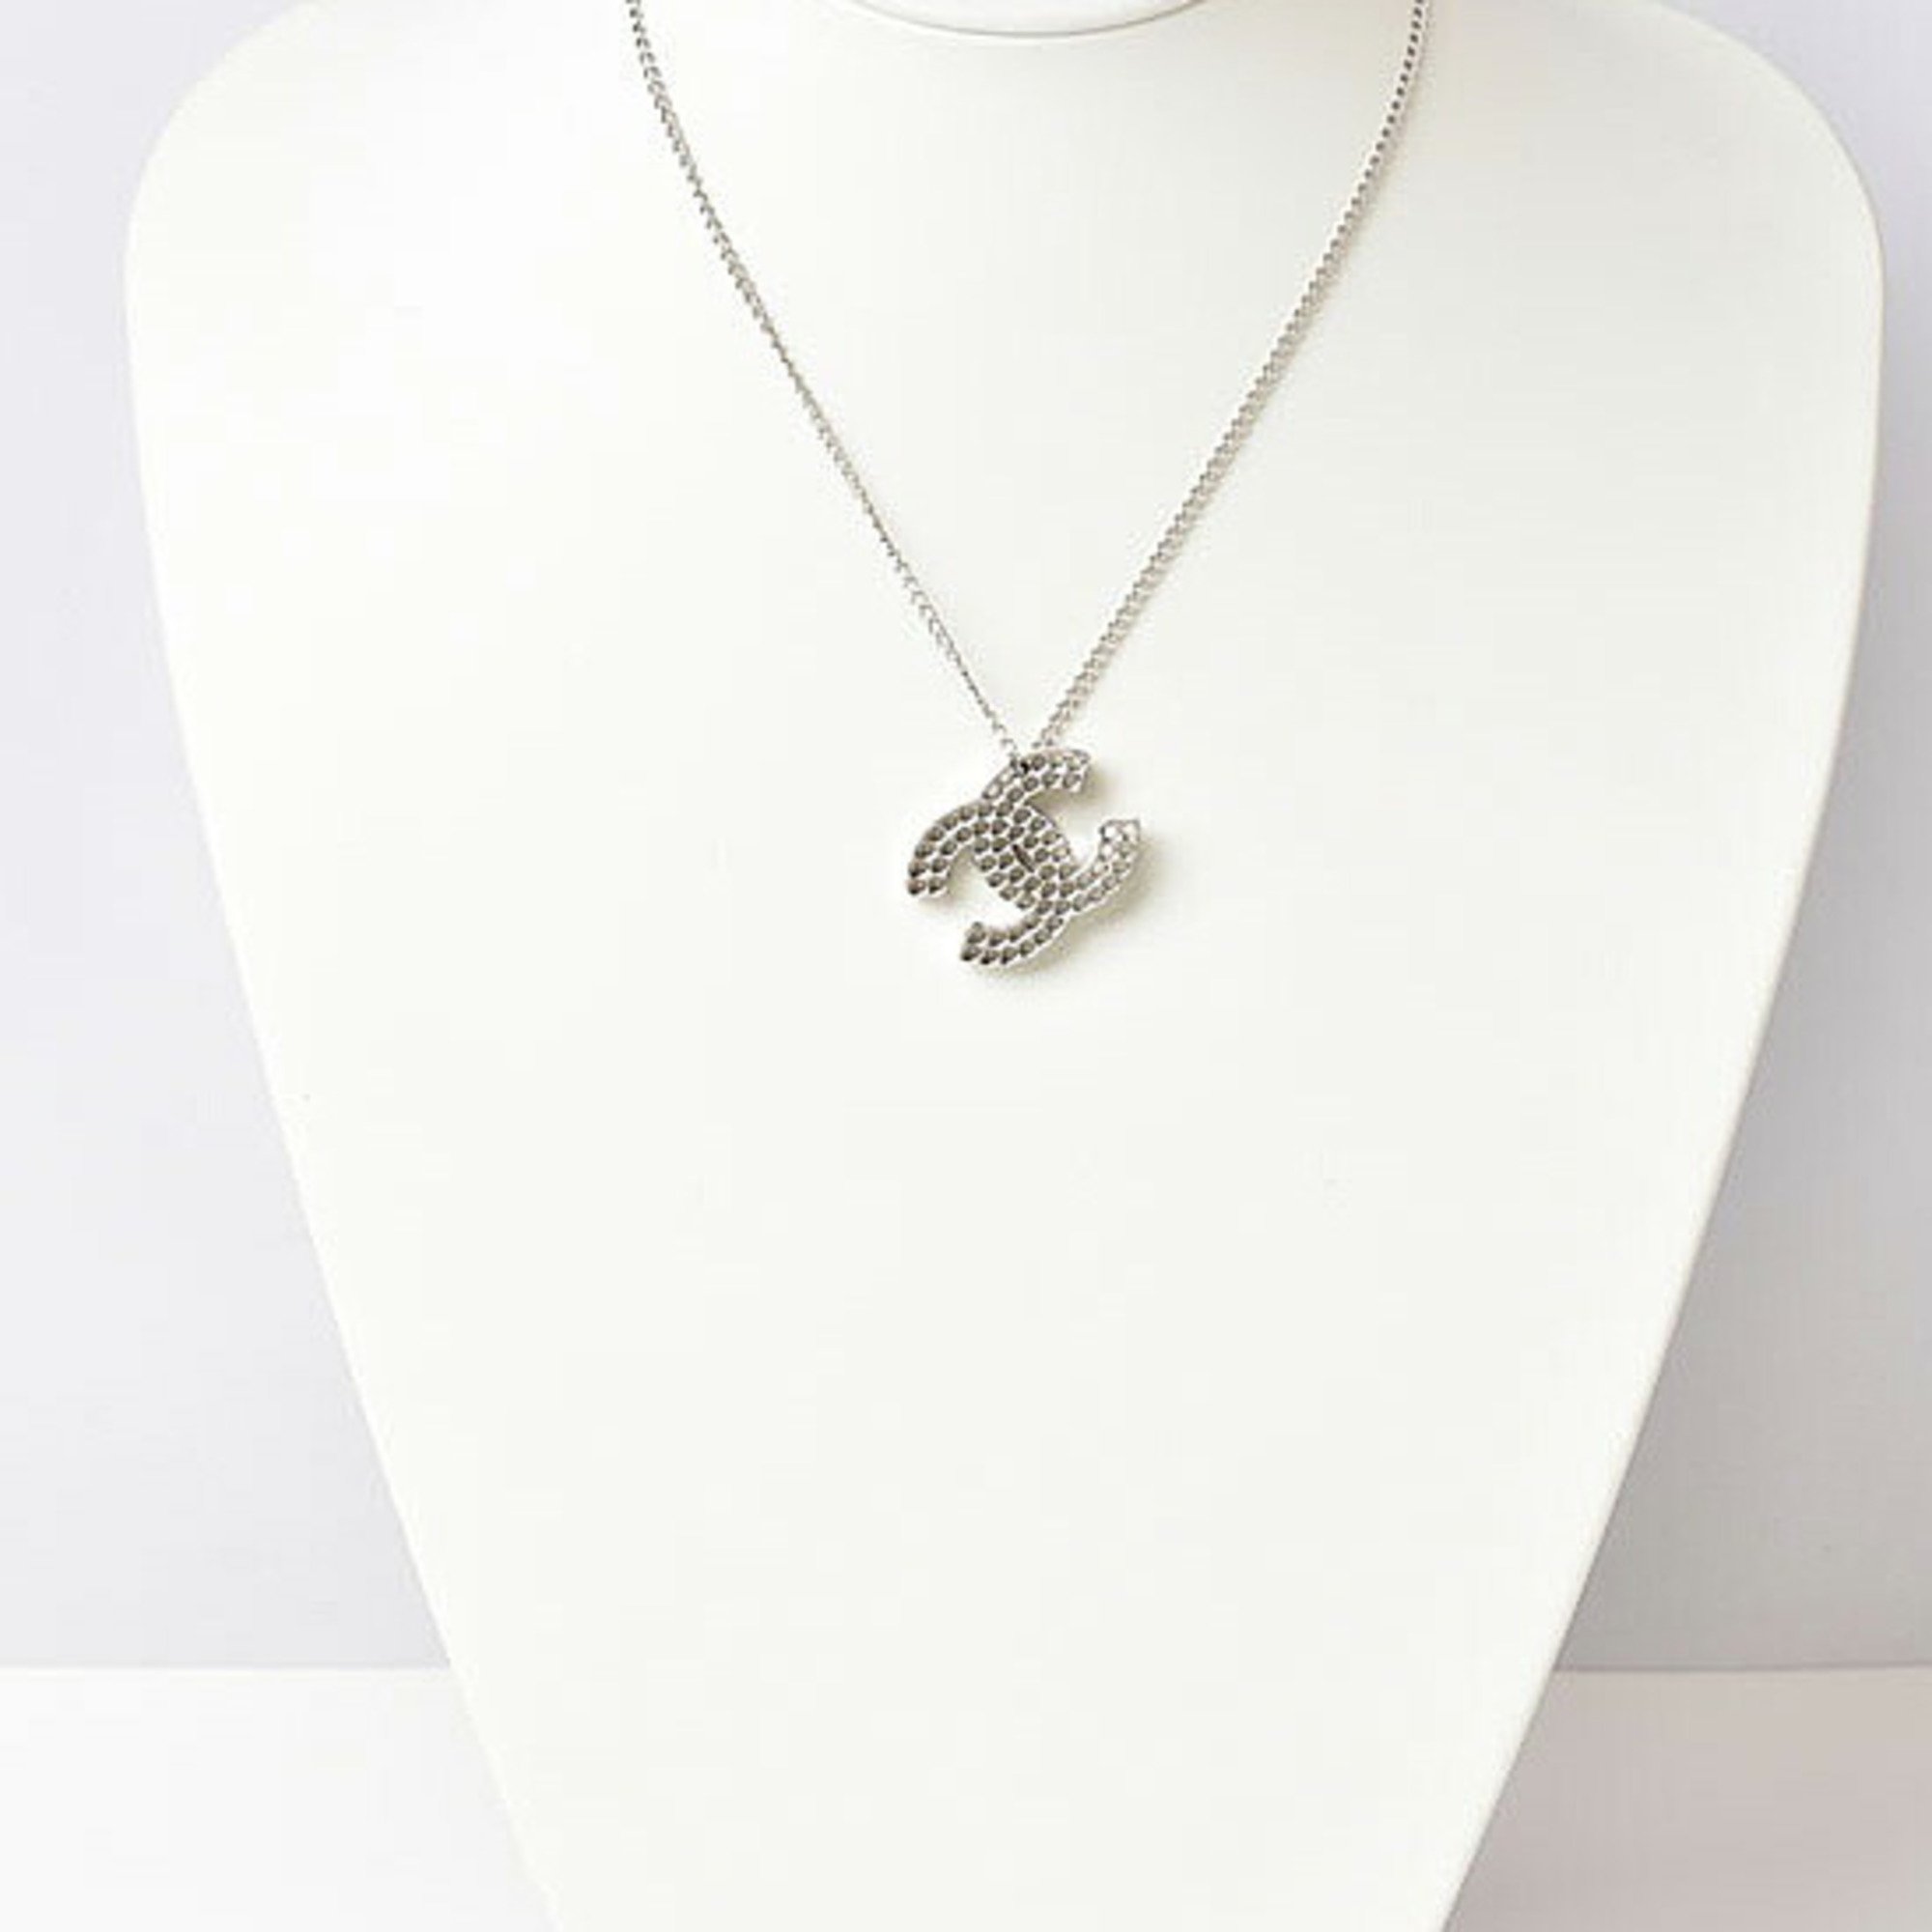 Chanel necklace pendant CHANEL here mark CC studs black silver